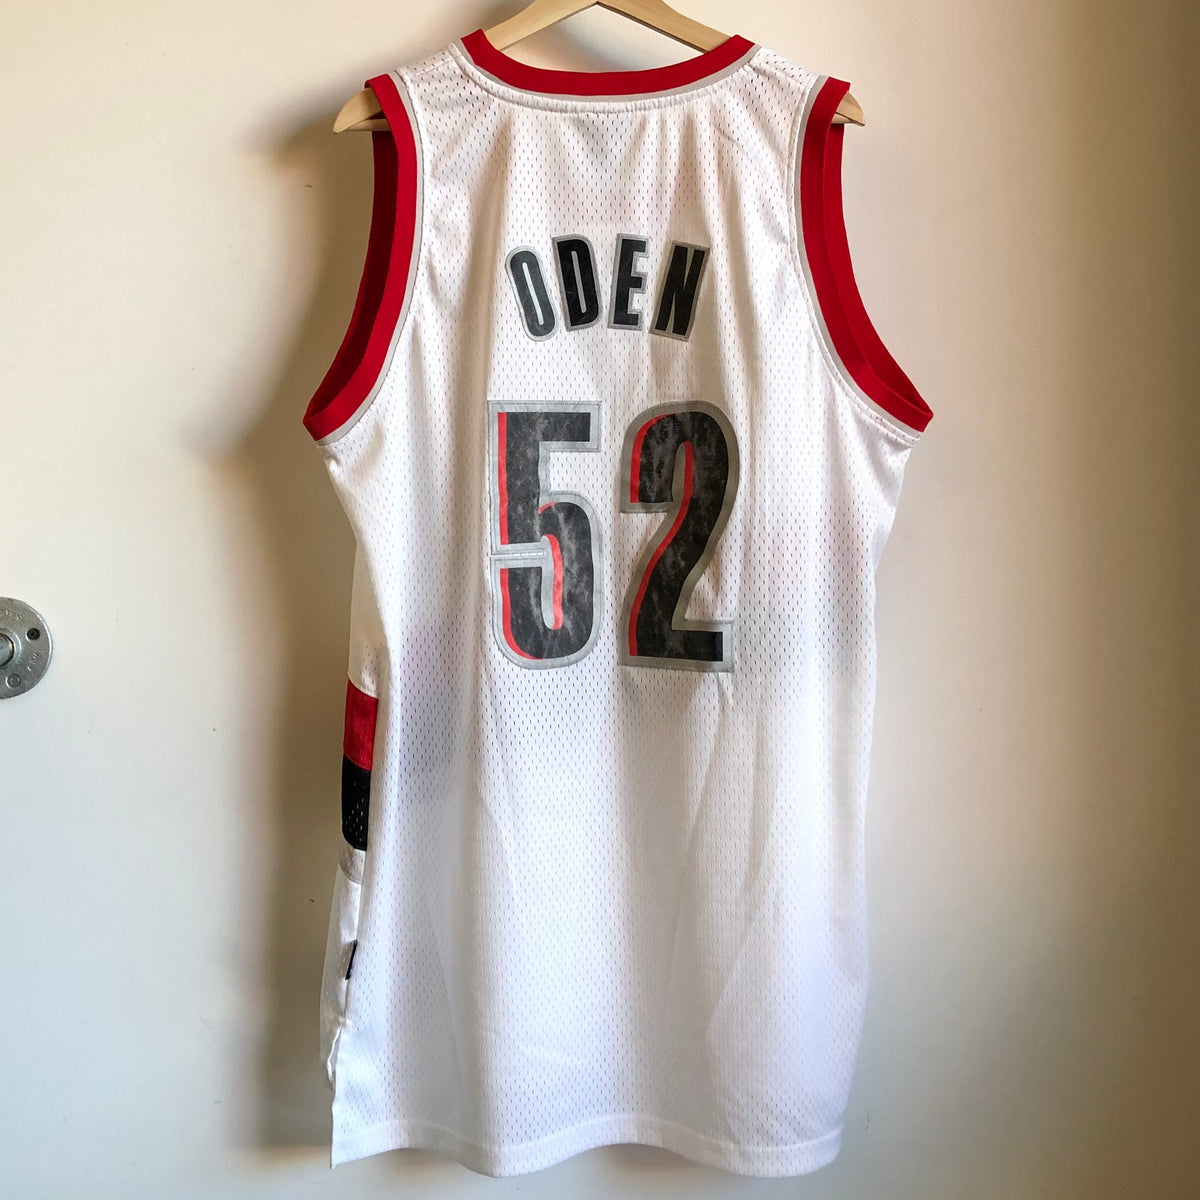 Authentic Greg Oden #52 Portland Trail Blazers adidas NBA Basketball Jersey